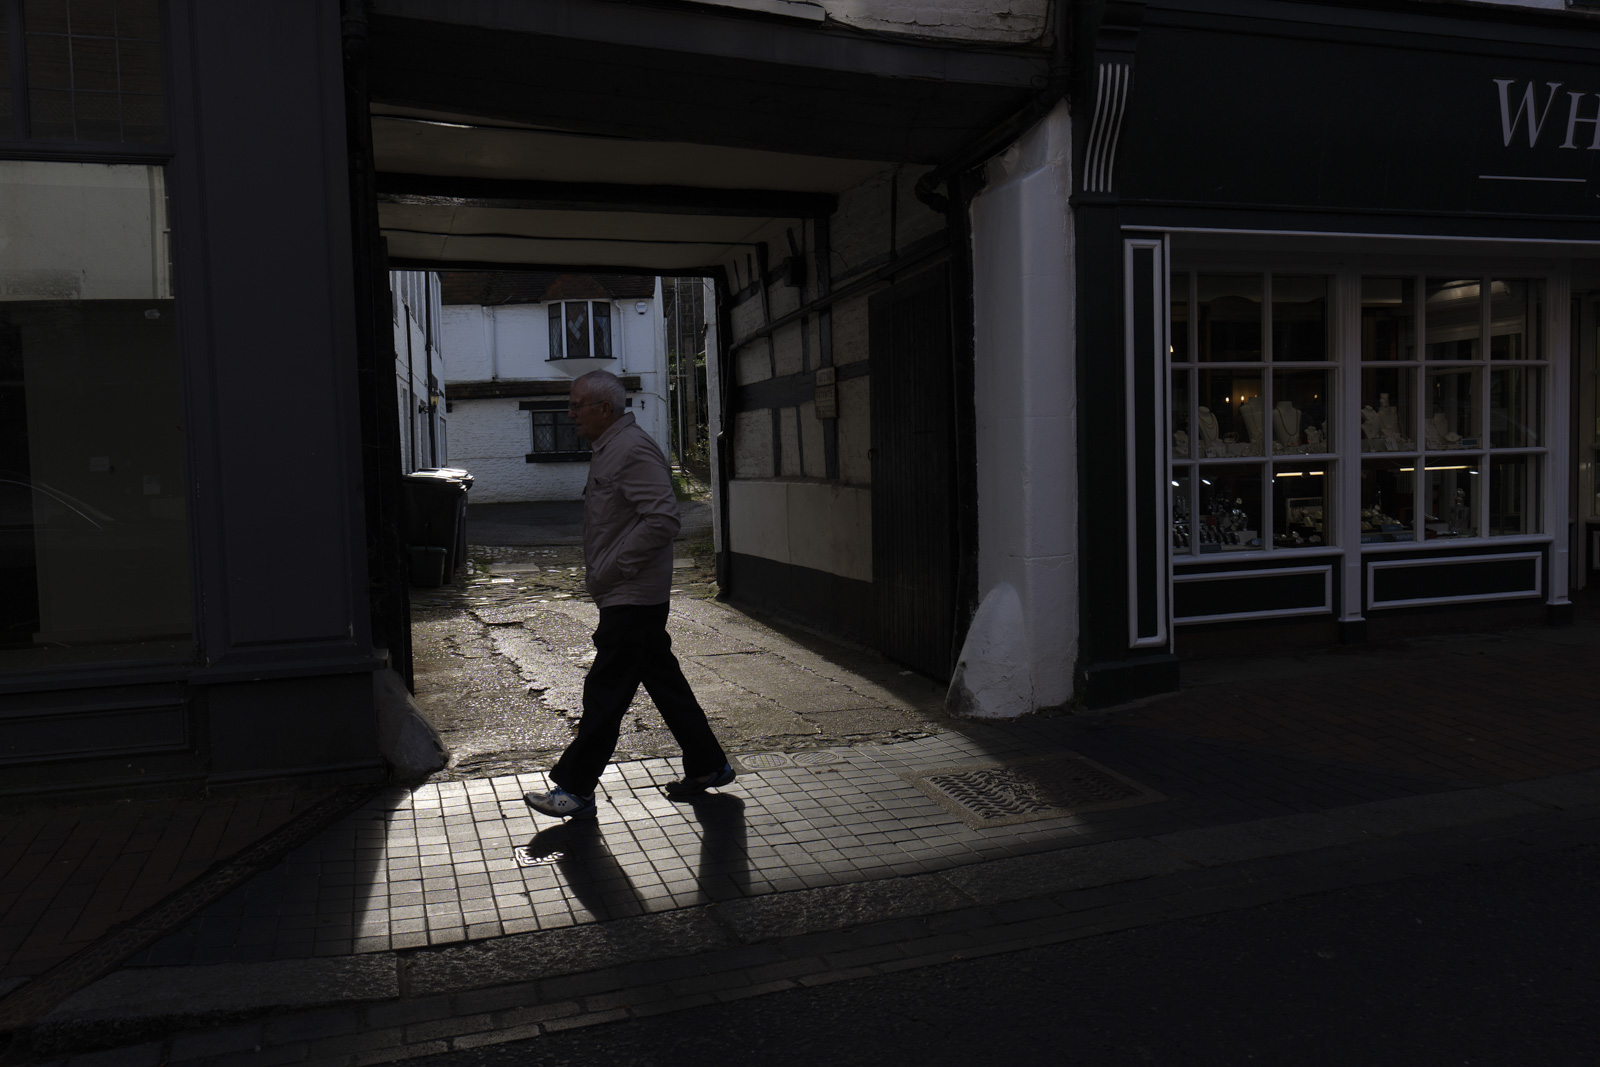 Picture taken with Panasonic S5 II of street scene decisive moment man walking into shaft of light